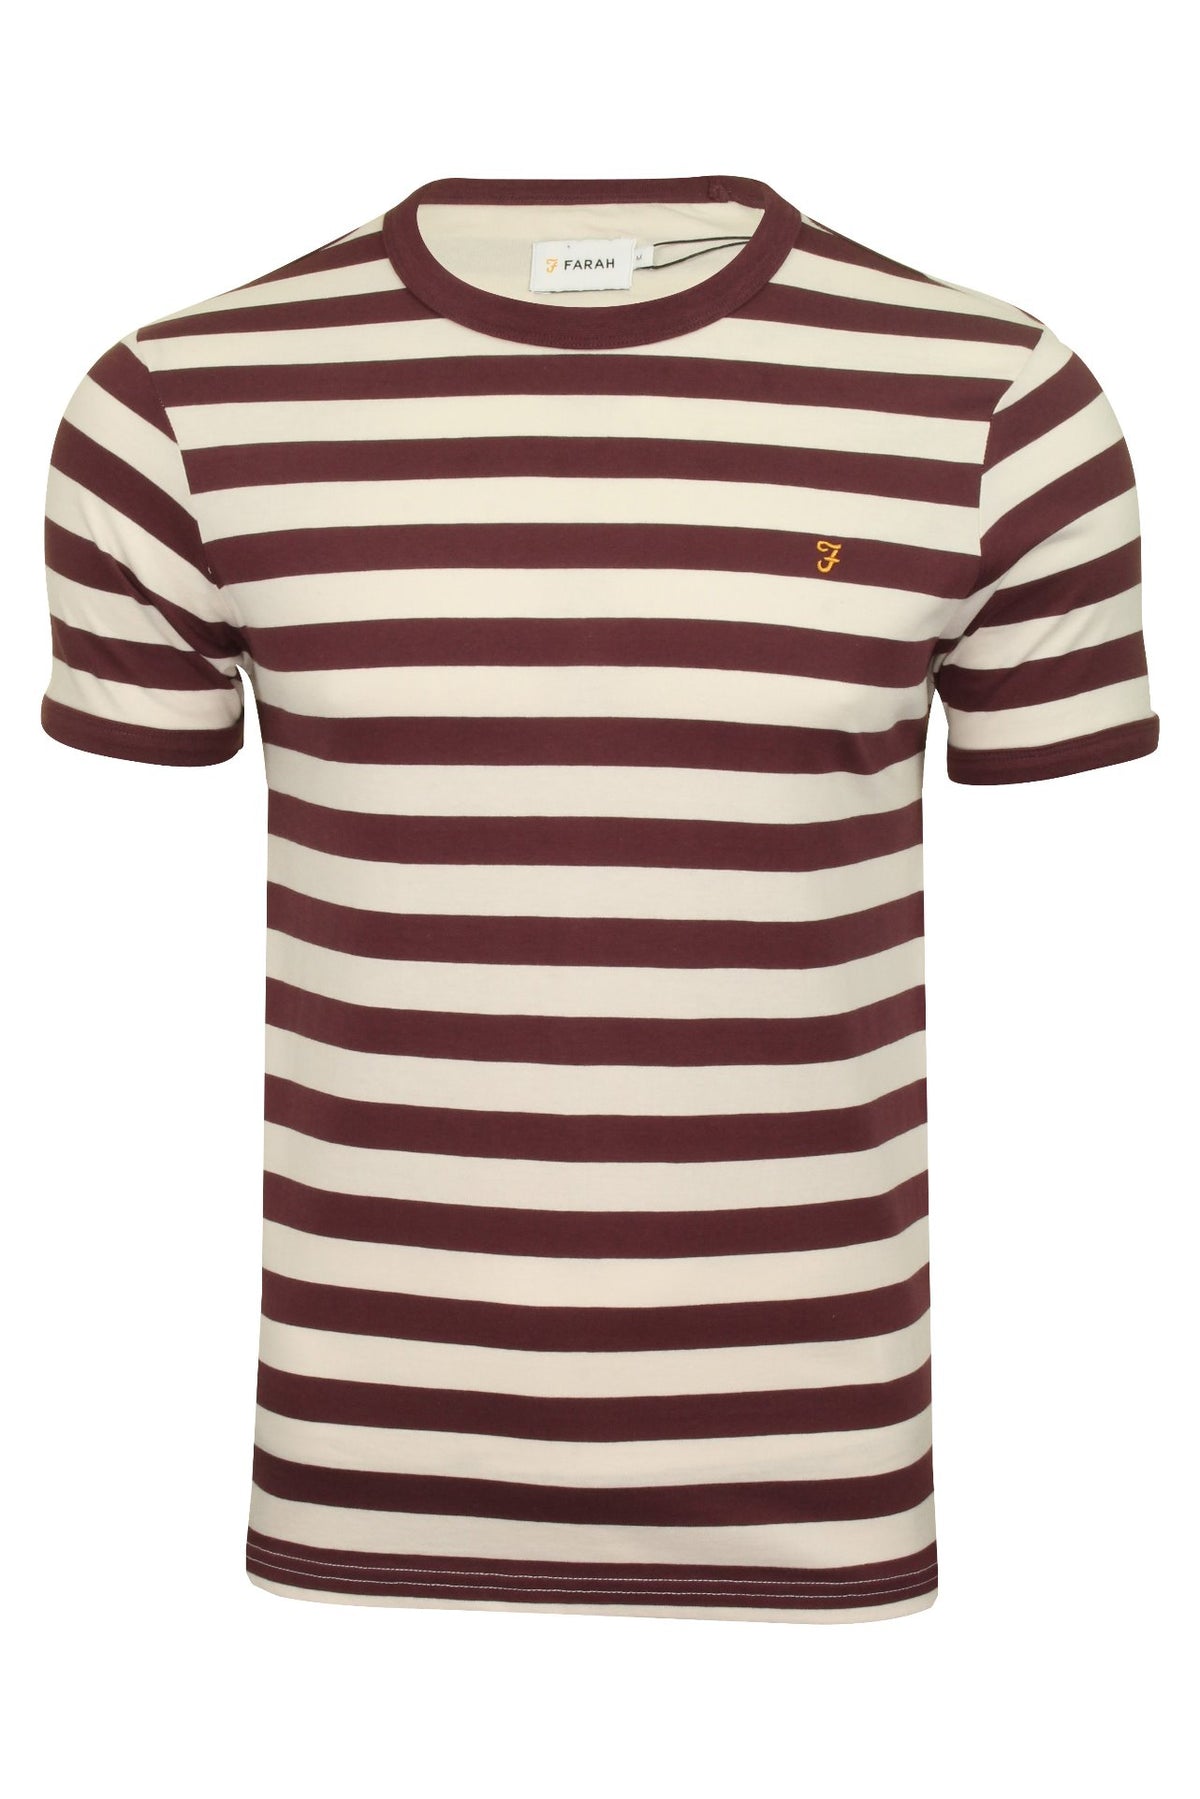 Farah Mens T-Shirt 'Belgrove Stripe', 01, F4Kf8066, Farah Red/Ecru